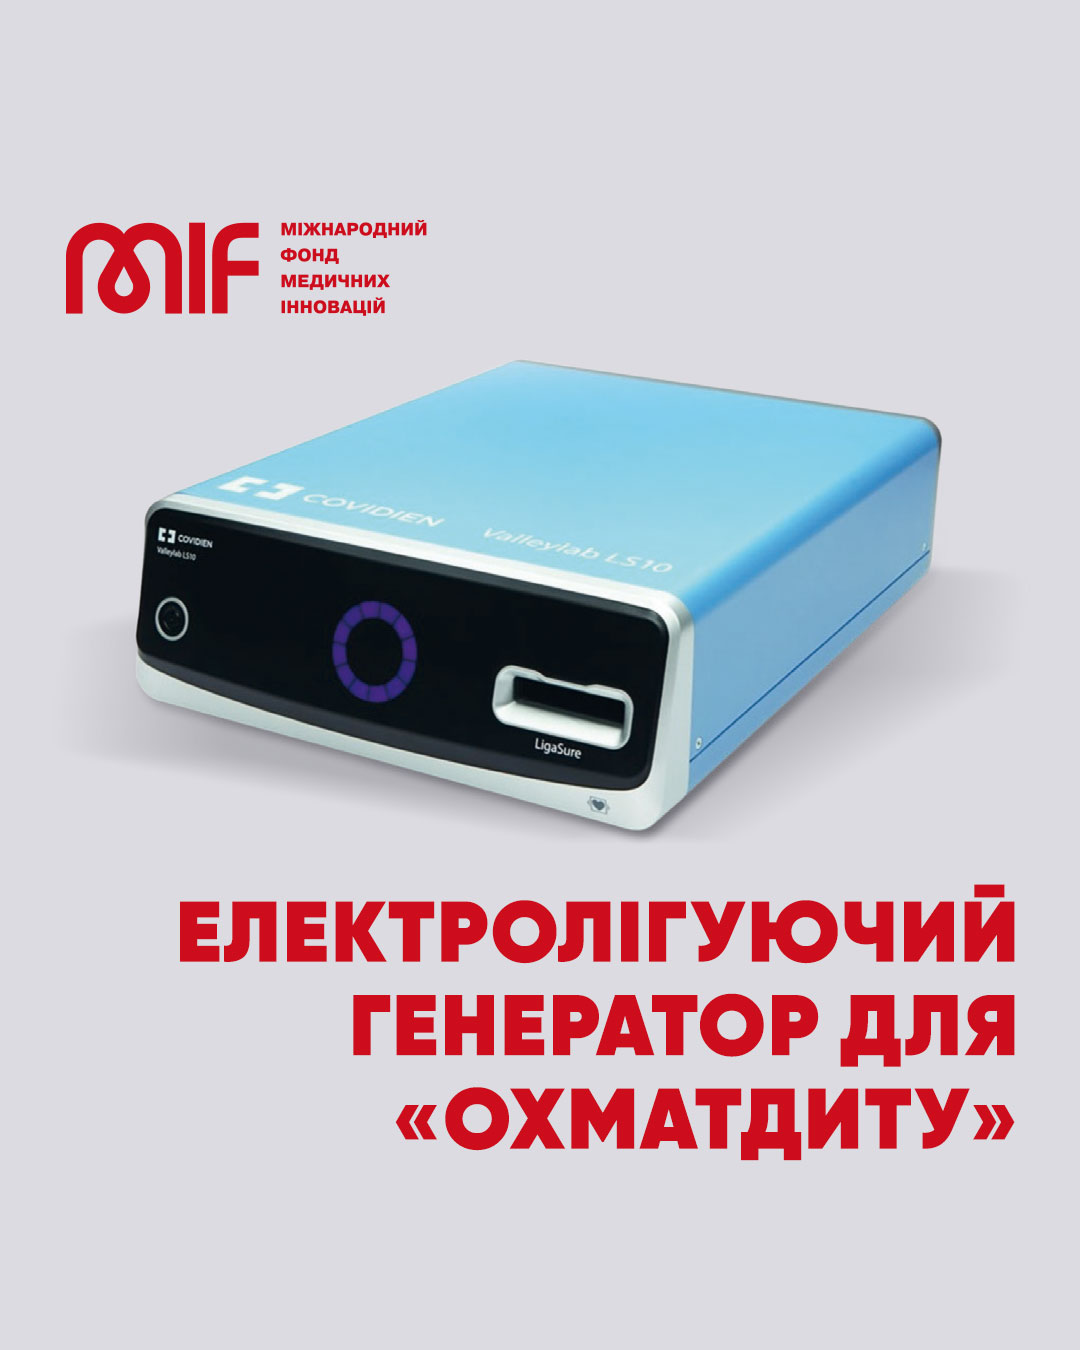 Electrolytic generator for Okhmatdyt